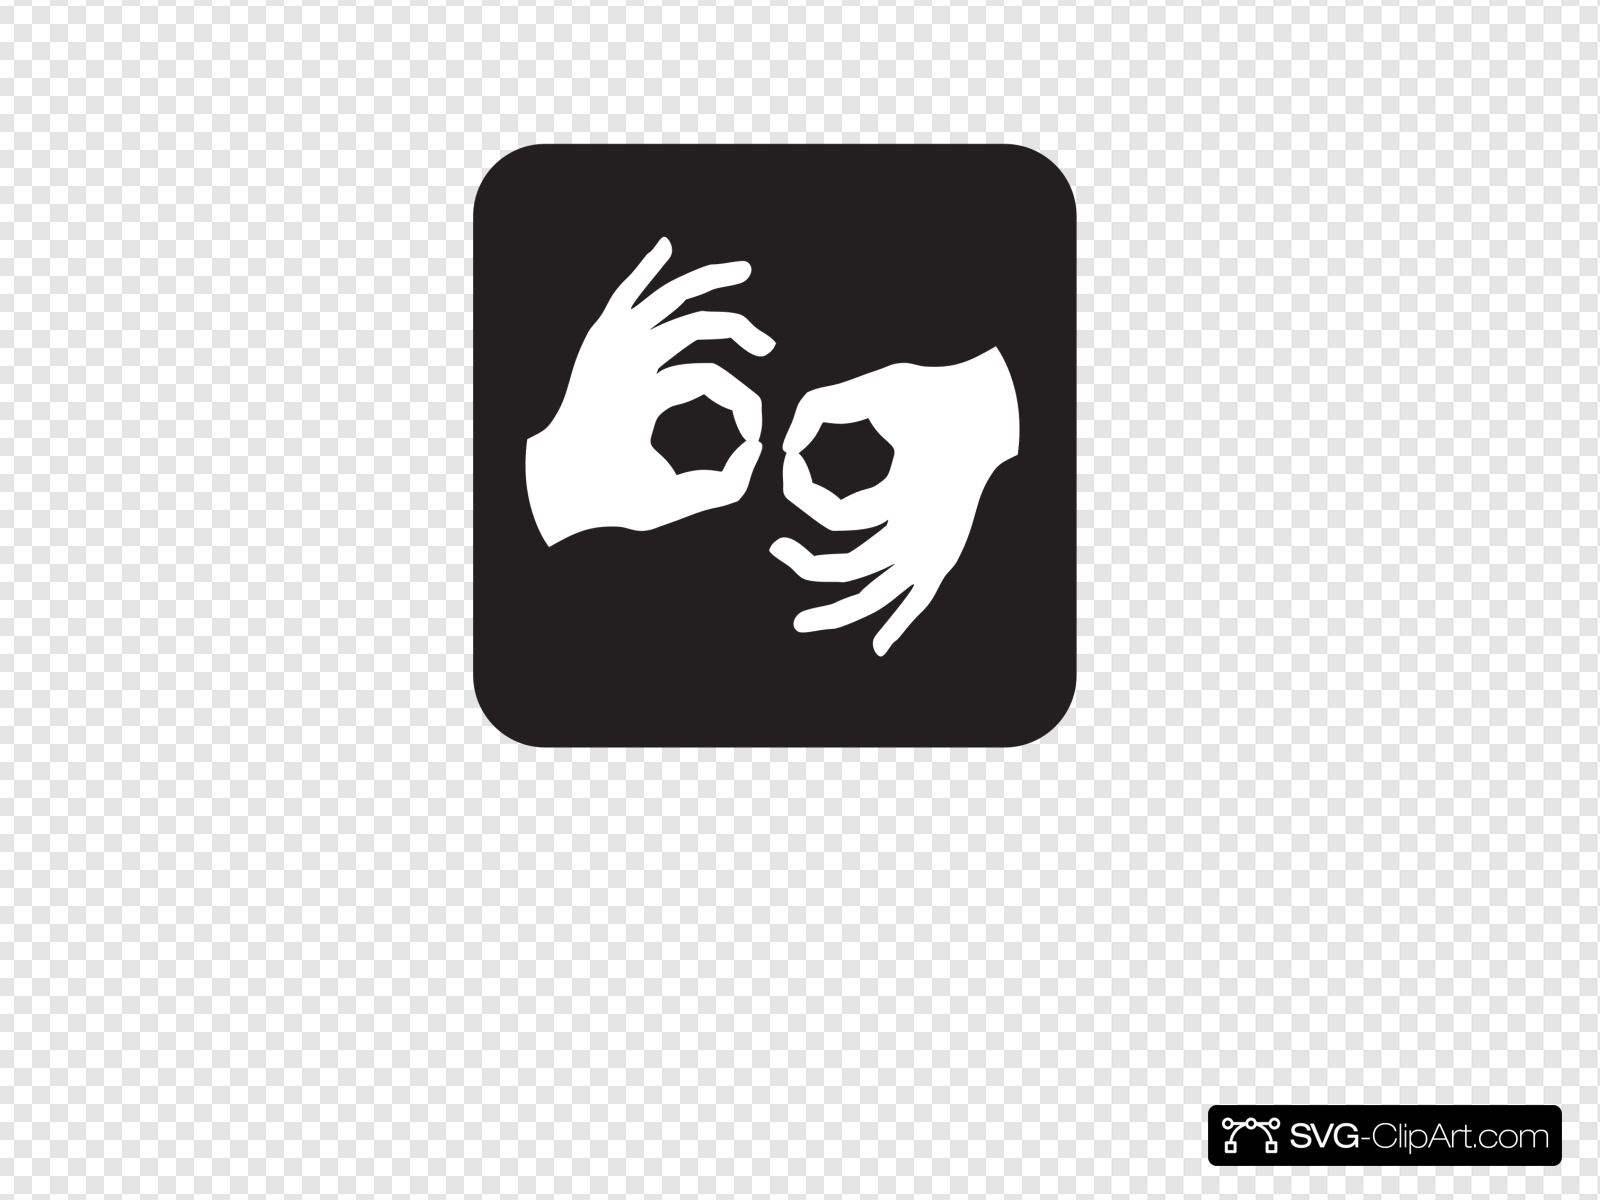 Sign Language Interpretation Black Clip art, Icon and SVG